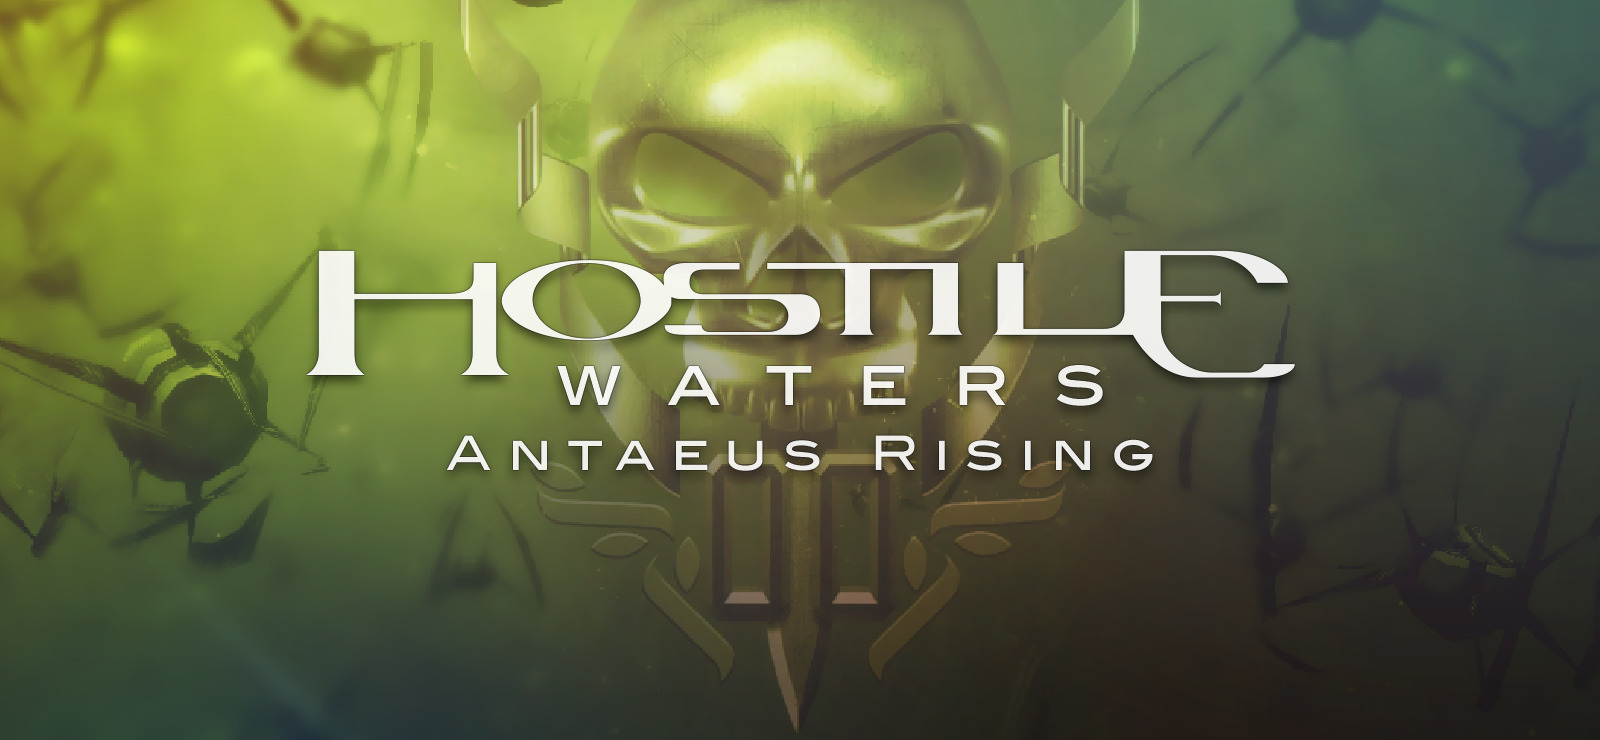 Hostile Waters: Antaeus Rising DRM-Free Download - Free GOG.